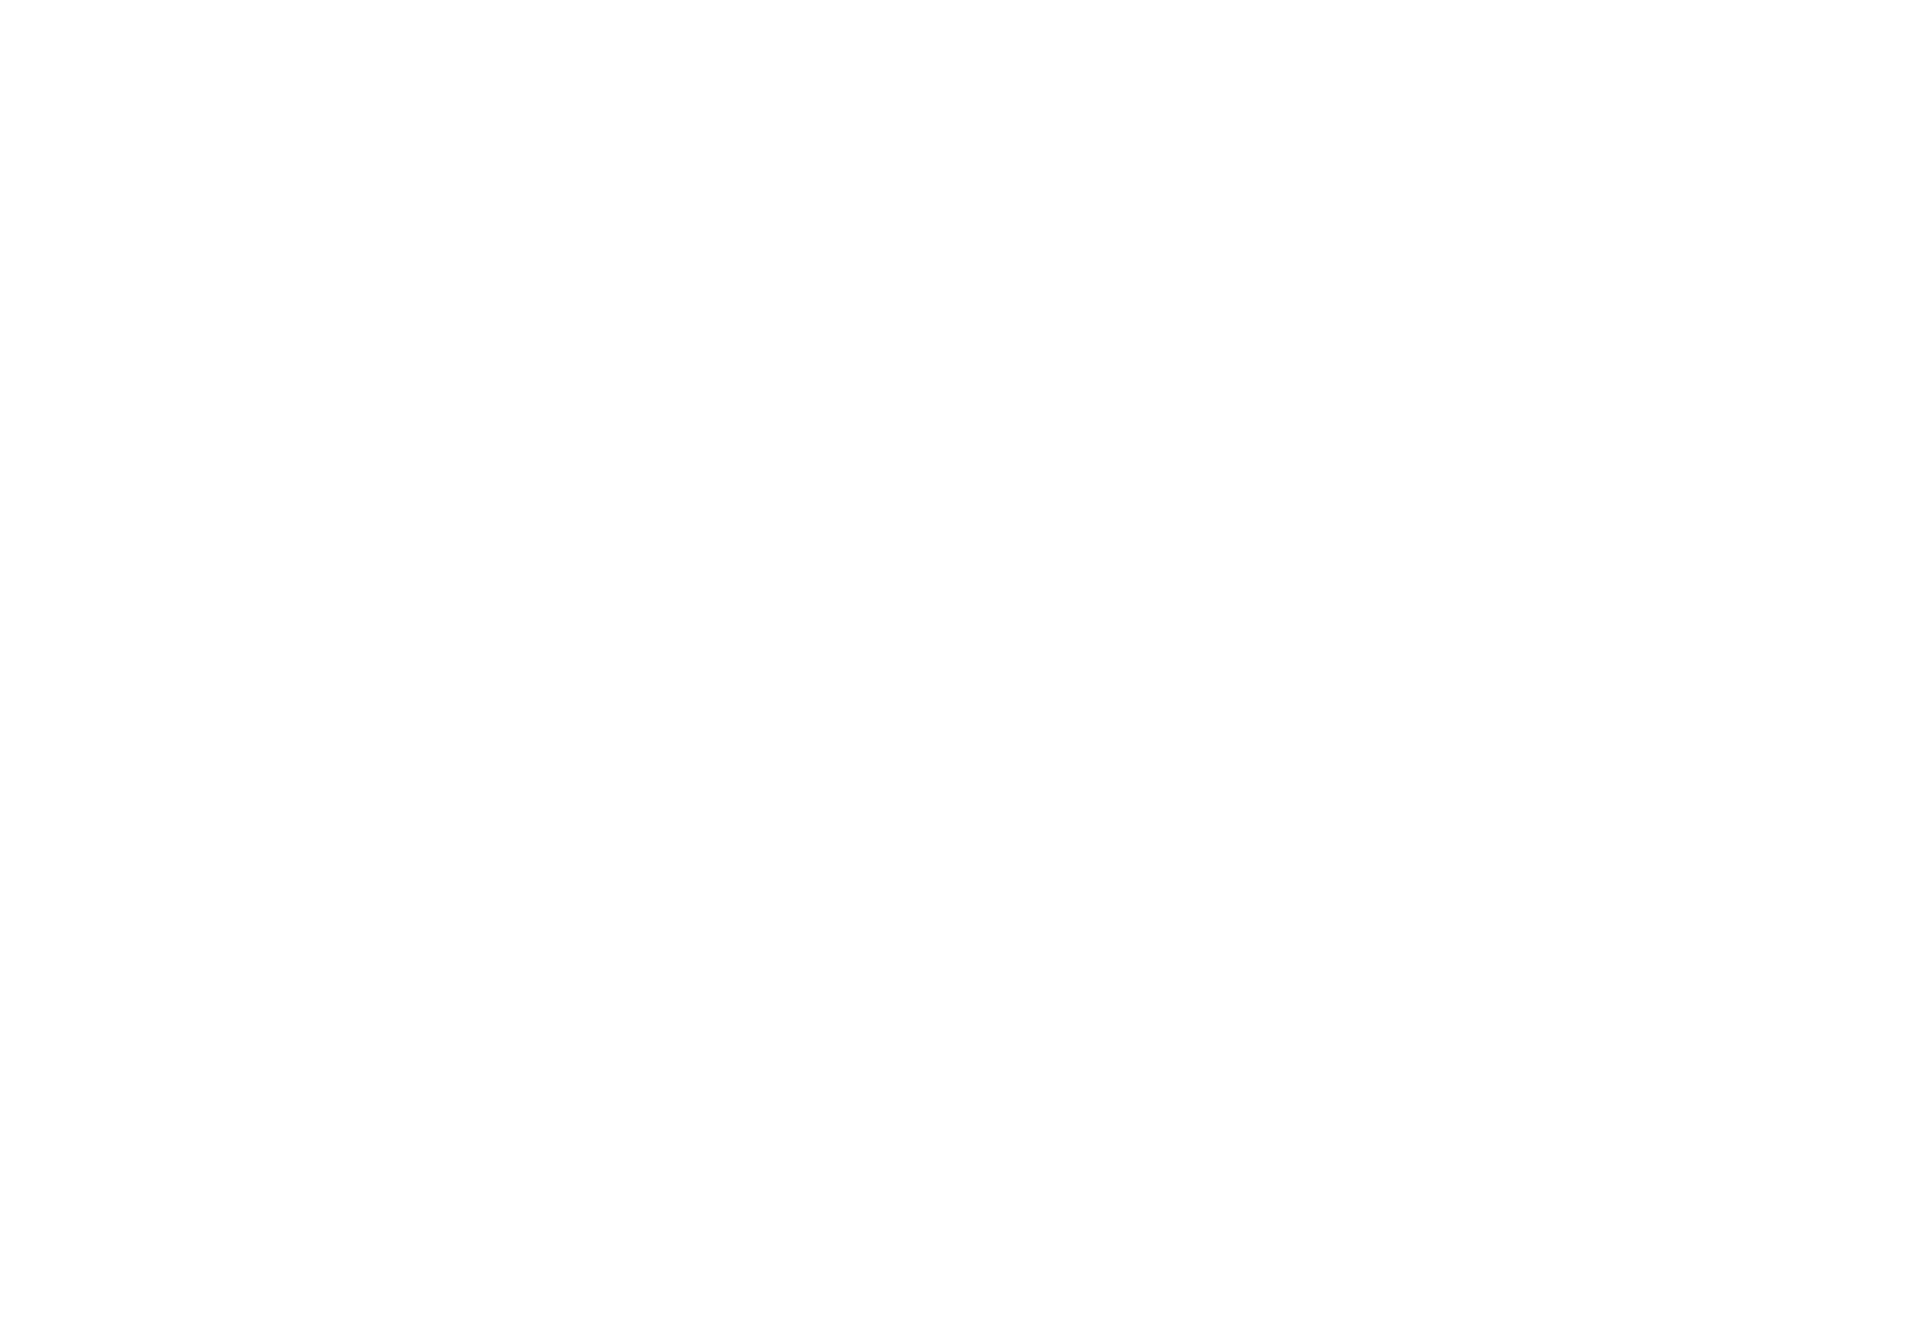 text that reads 'lighter longer'